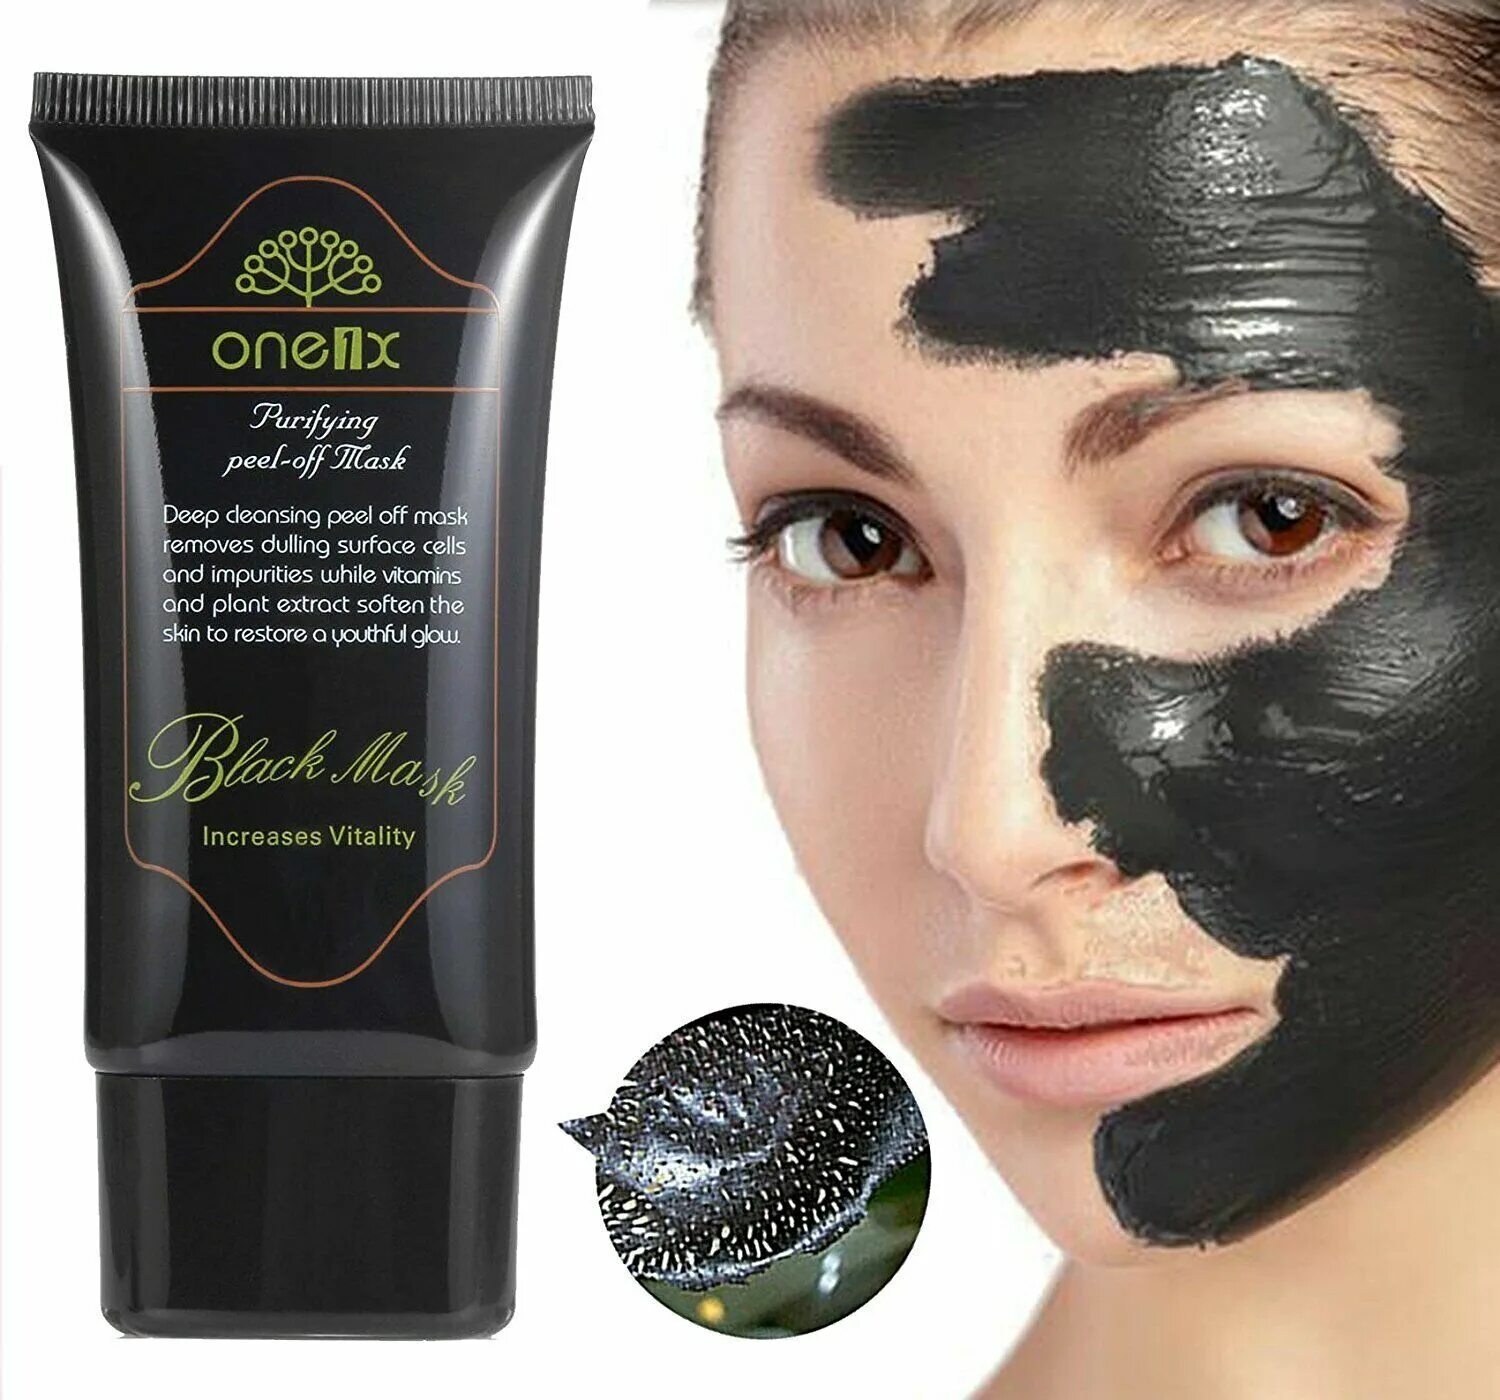 Blackheads маска. Черная маска Peel-off face. Blackhead Mask. Мужской салон черная маска для лицо. Black Mud facial Mask.